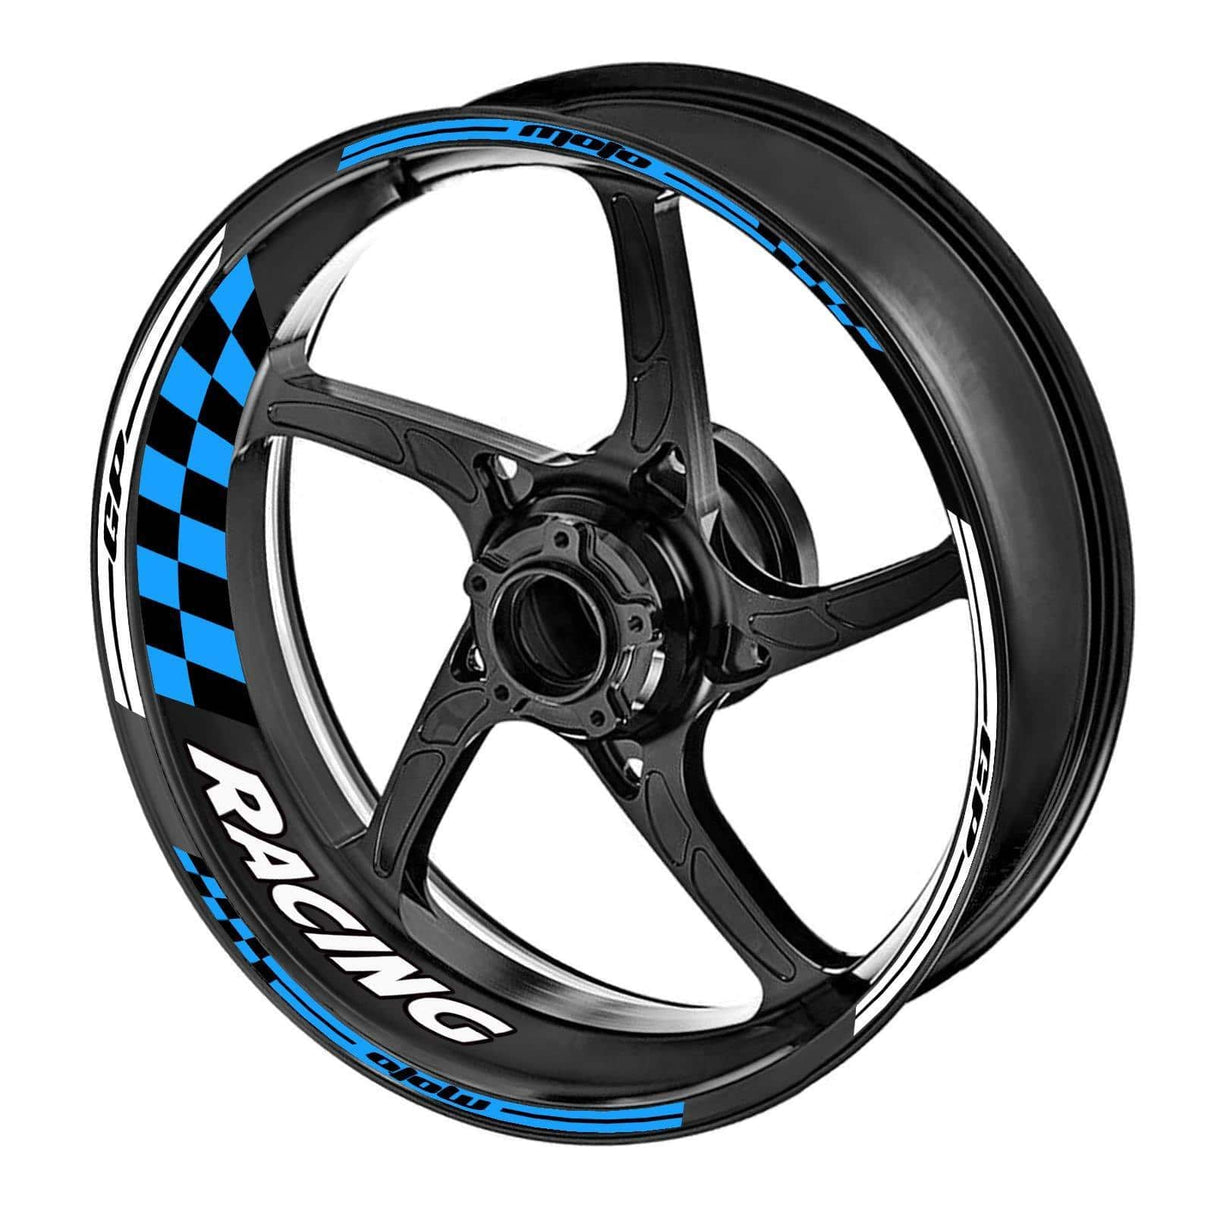 StickerBao Aqua 17 inch GP03 Platinum Inner Edge Rim Sticker Universal Motorcycle Rim Wheel Decal Racing For Honda